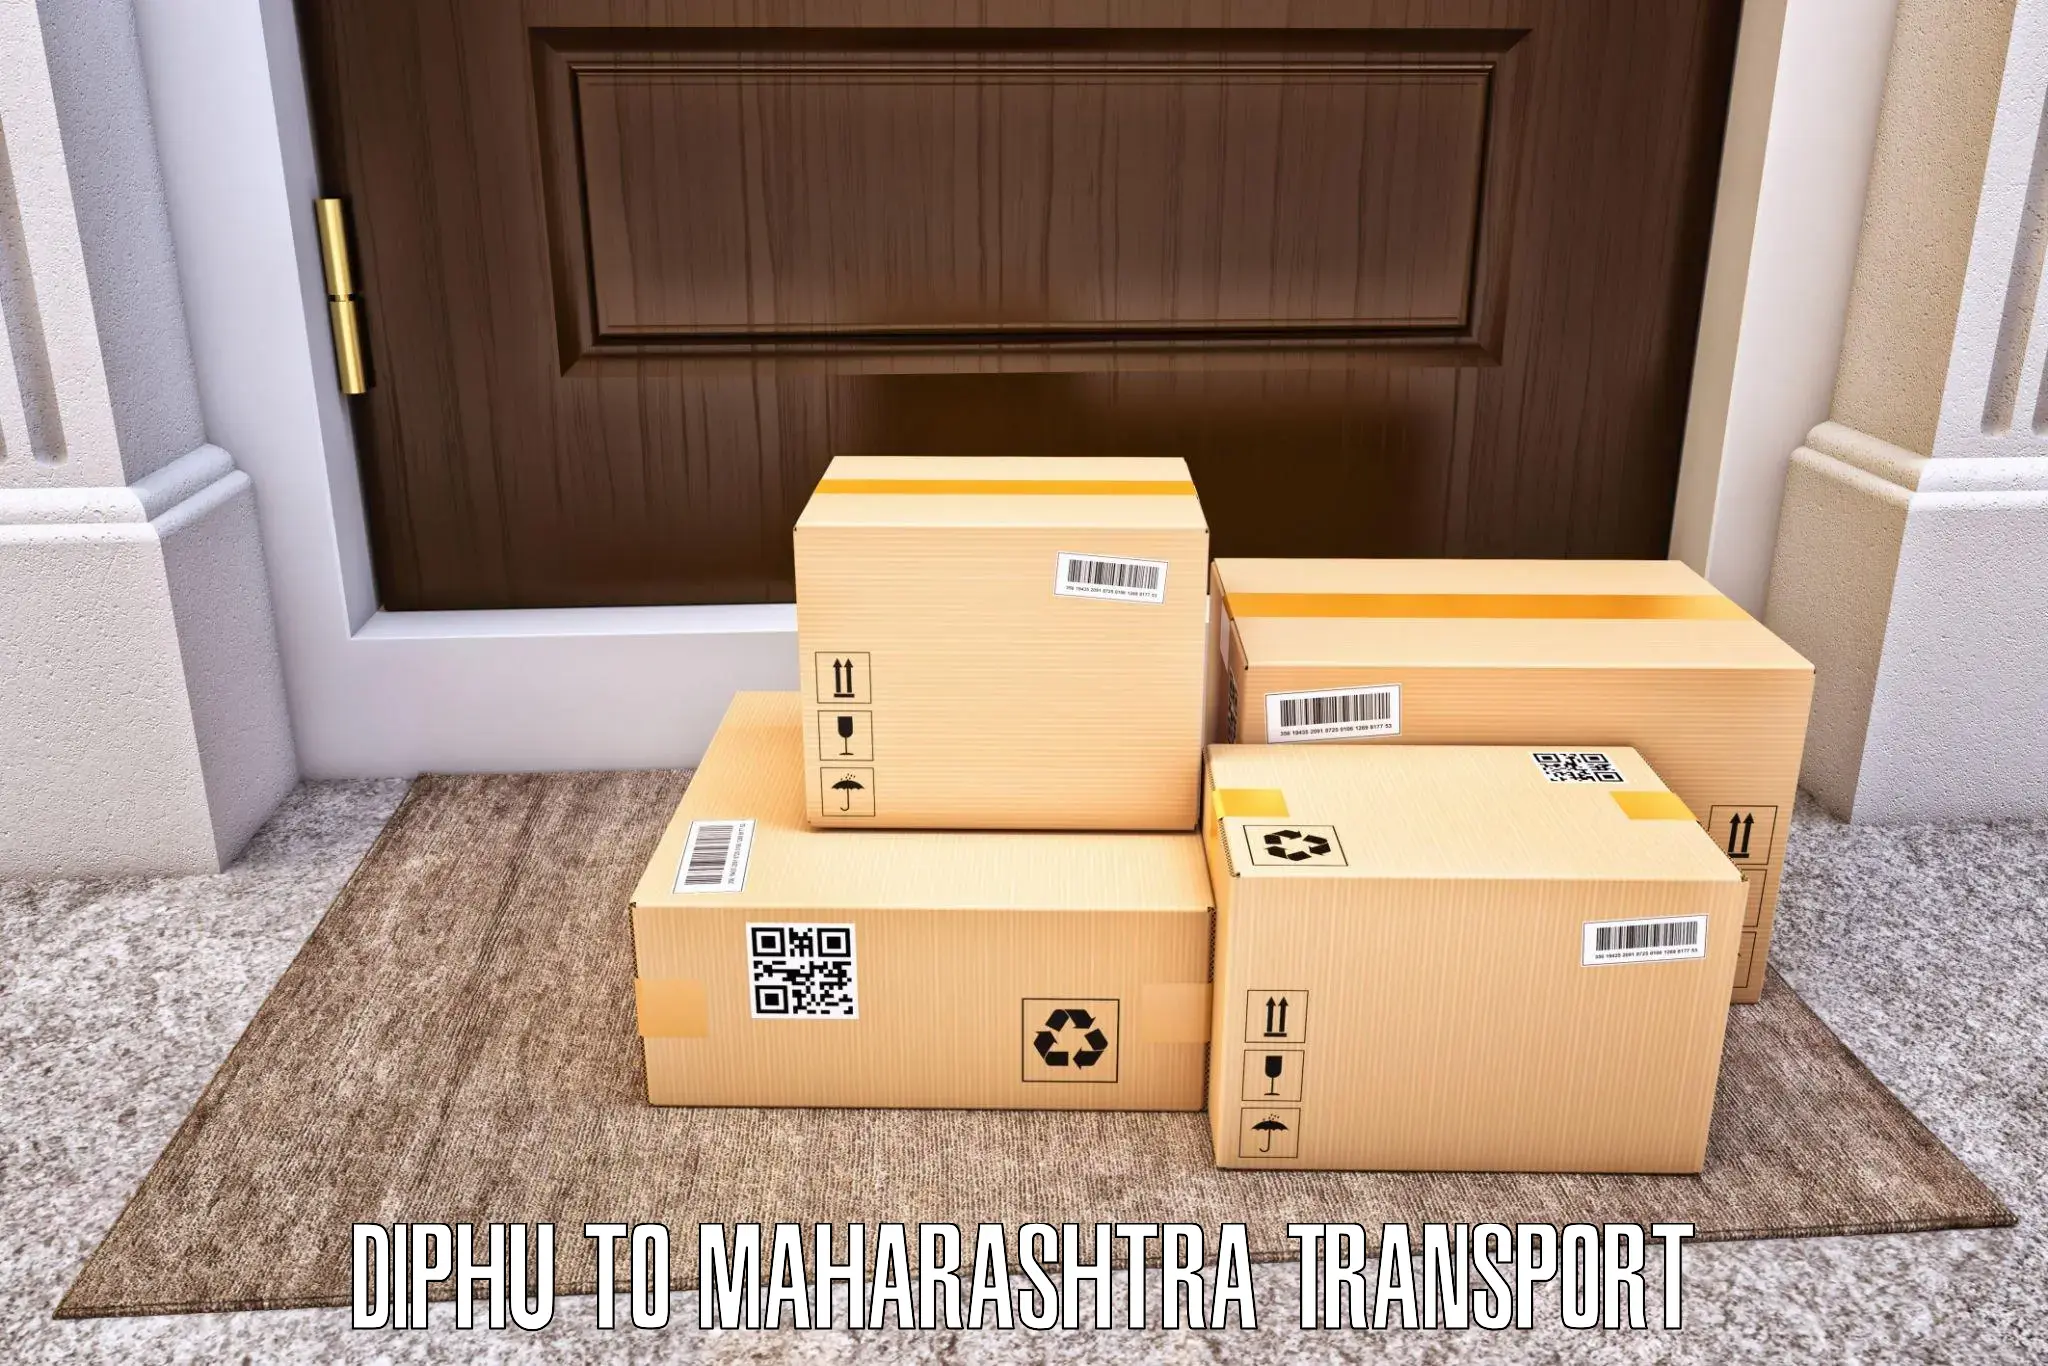 Delivery service Diphu to Gadchiroli